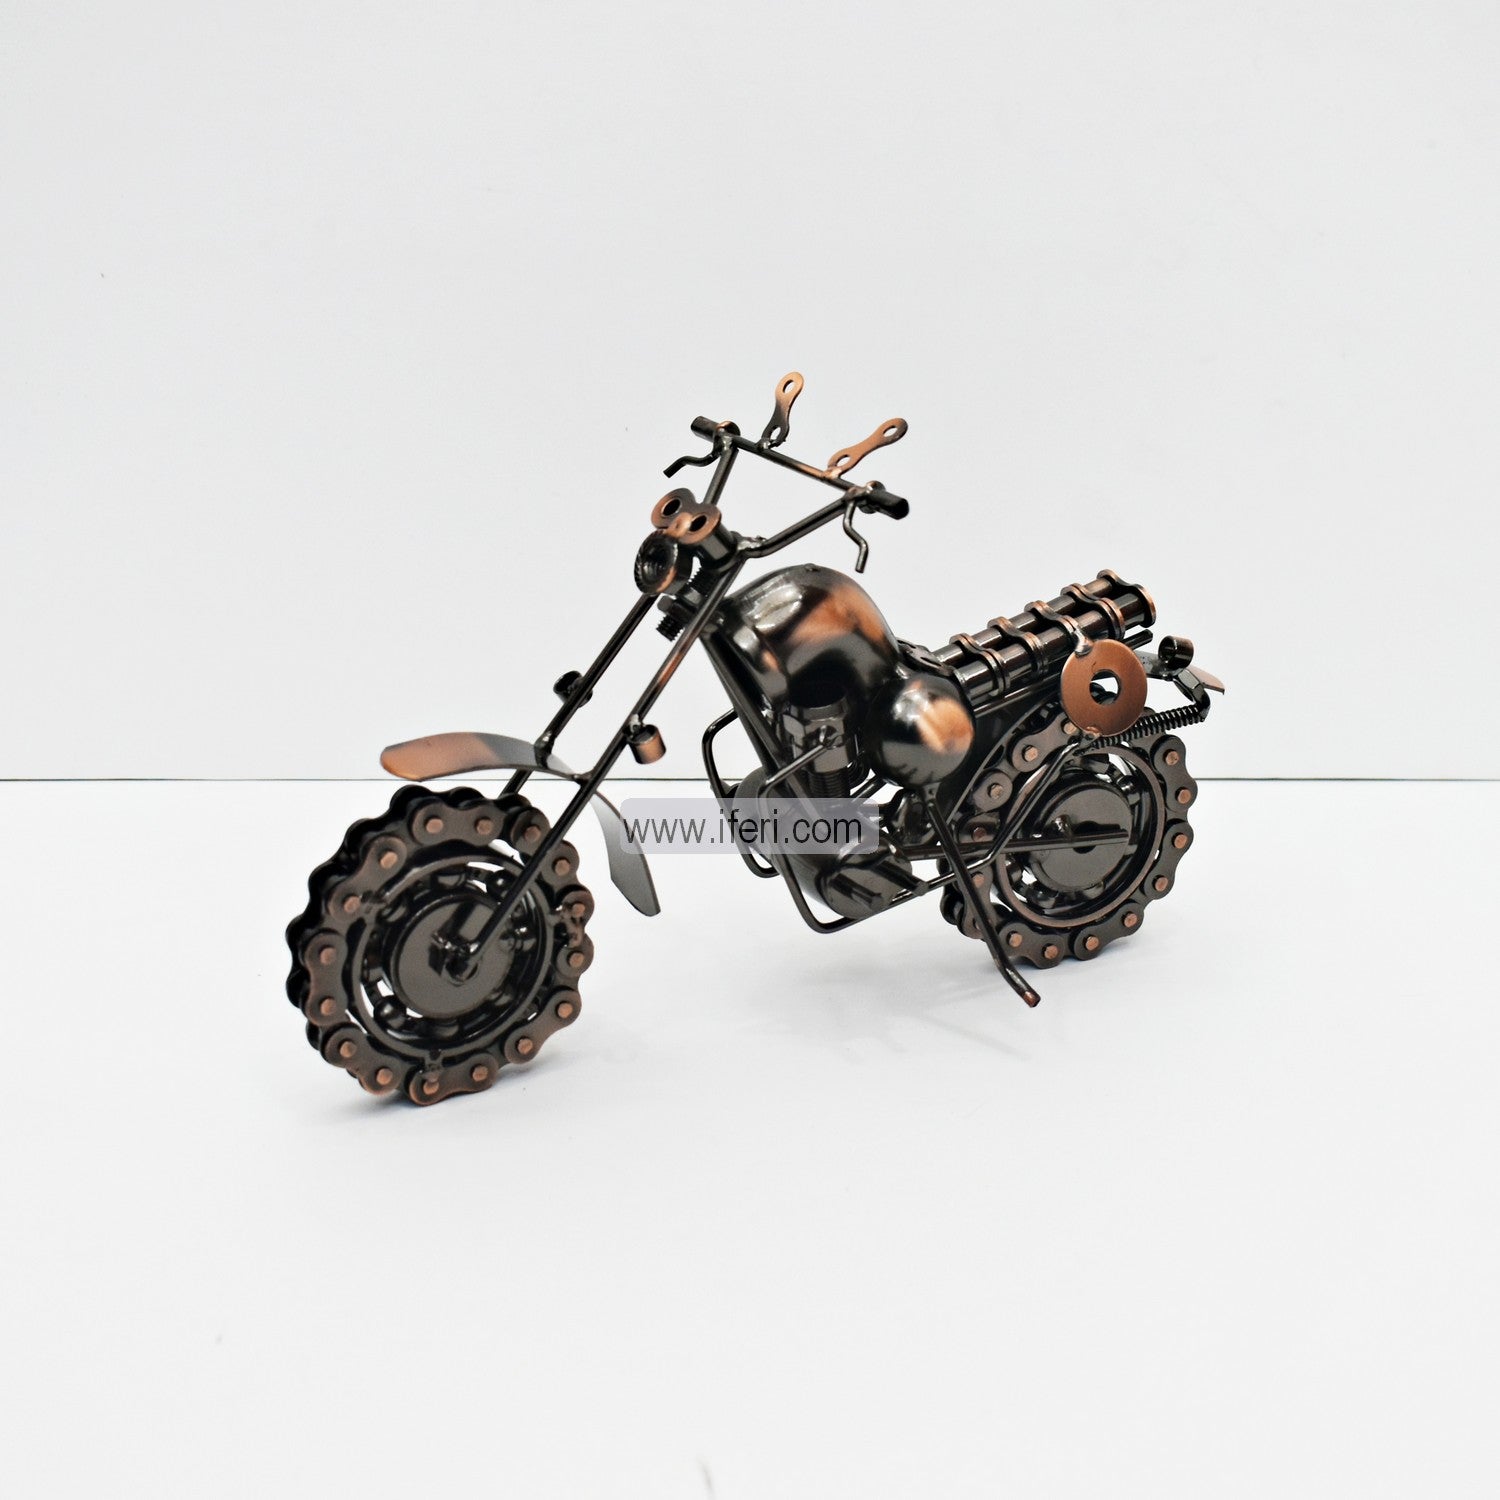 9.5 Inch Metal Motorcycle Model Sculpture Showpiece RY03857